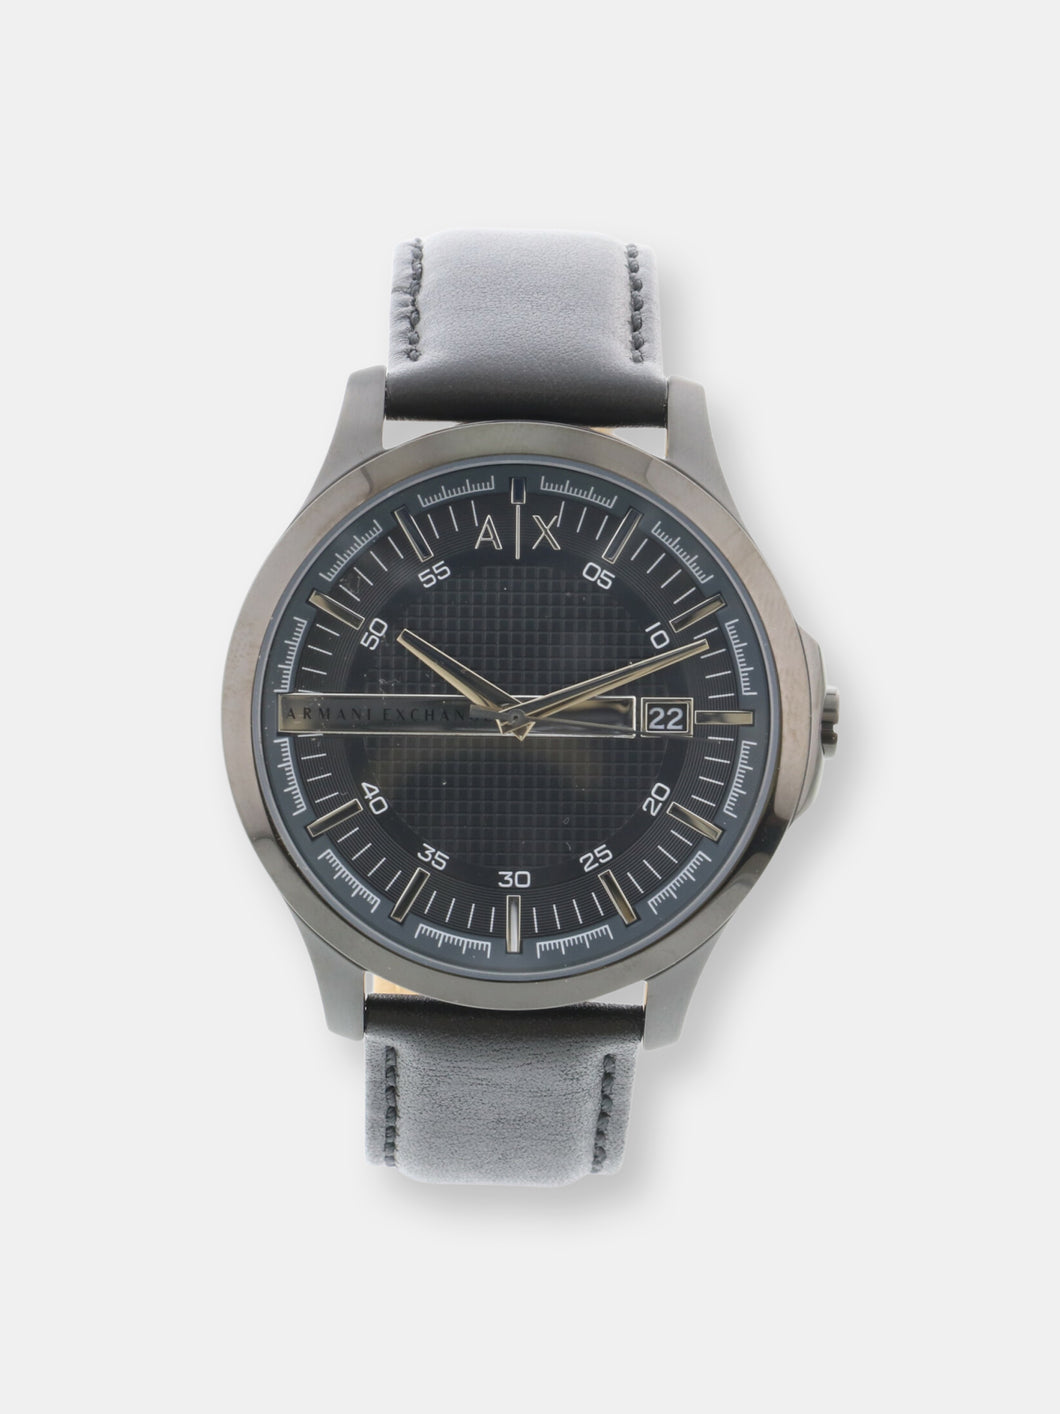 Armani Exchange Men's 3 Hand Date Leather AX2411 Black Japanese Quartz Fashion Watch